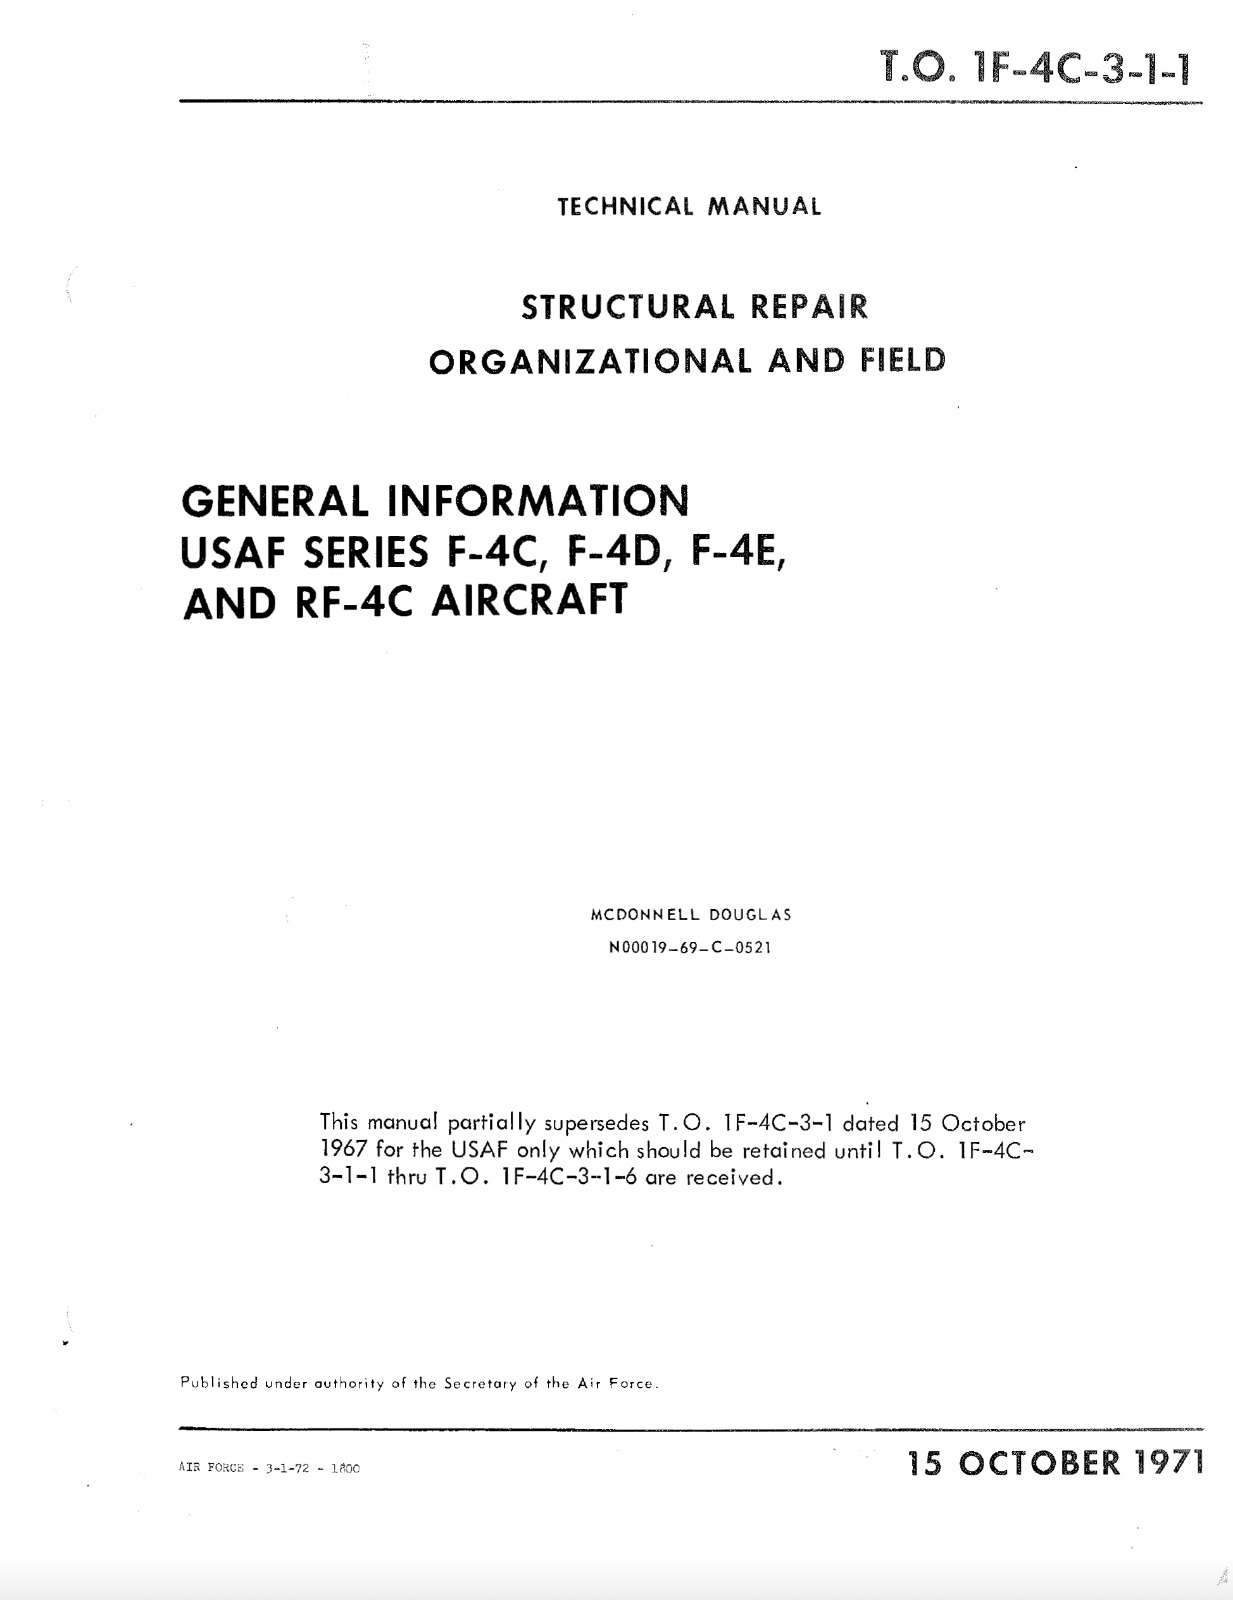 600 Page 1971 F-4 C D E Phantom II  T.O. 1F-4C-3-1-1 Stuctural Repair Manual CD